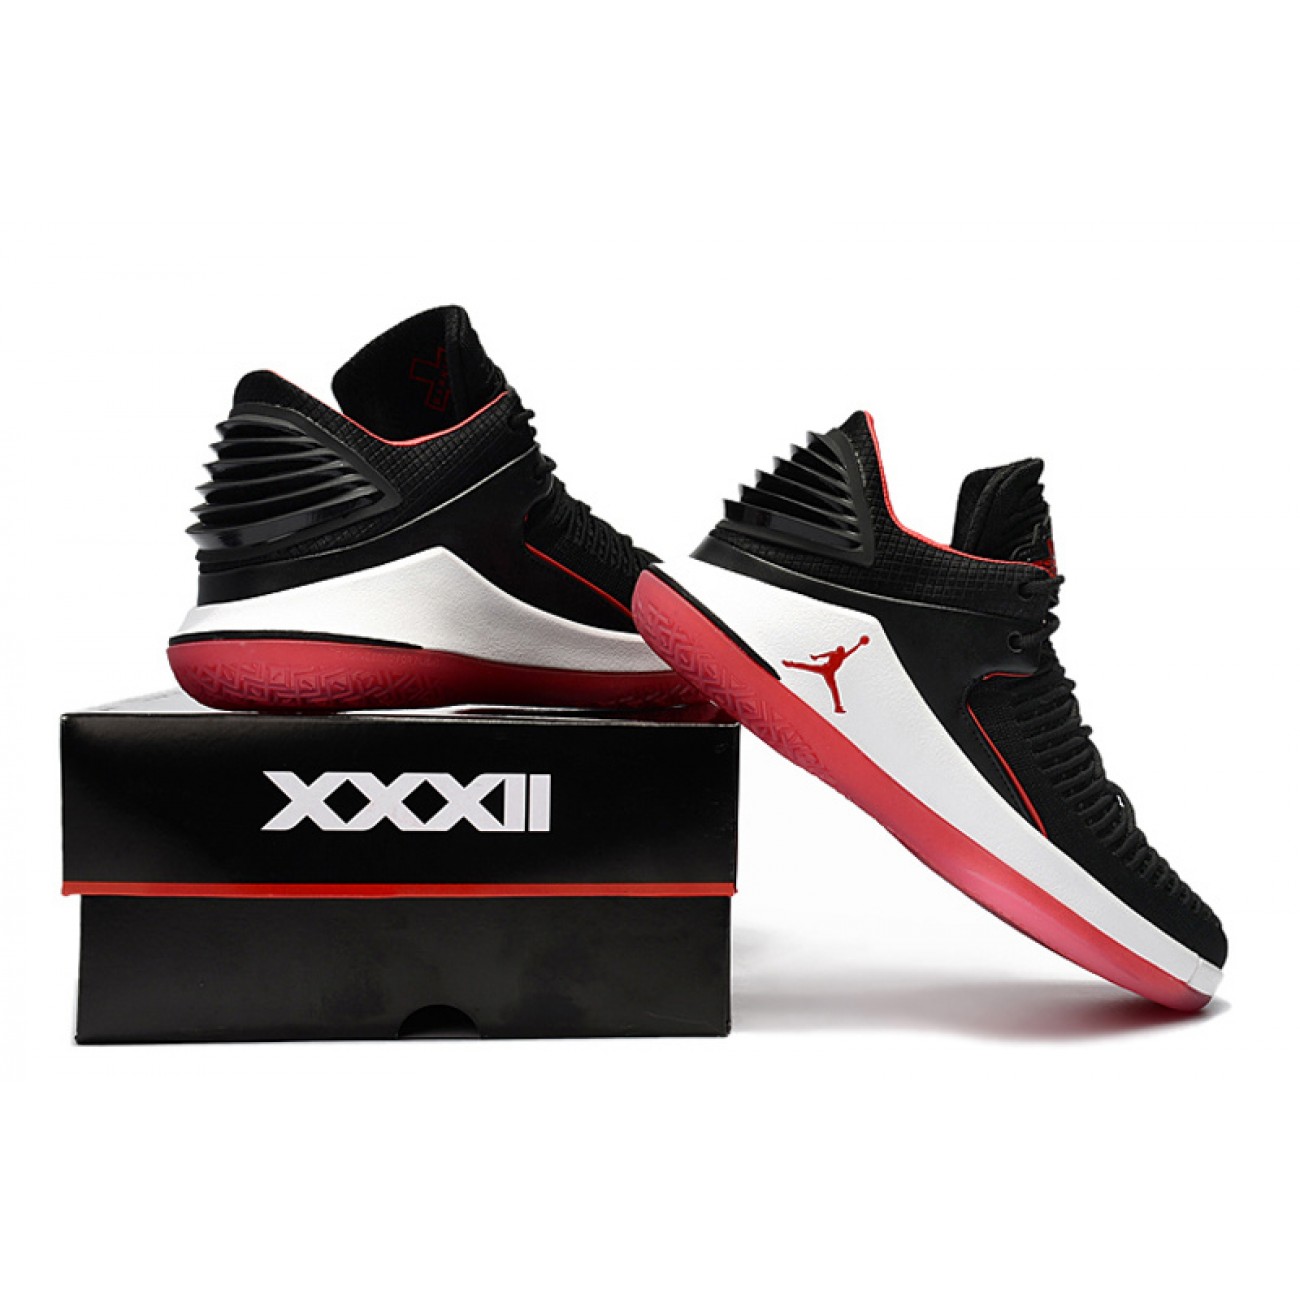 Air Jordan 32 XXXII Low Black/White/Red